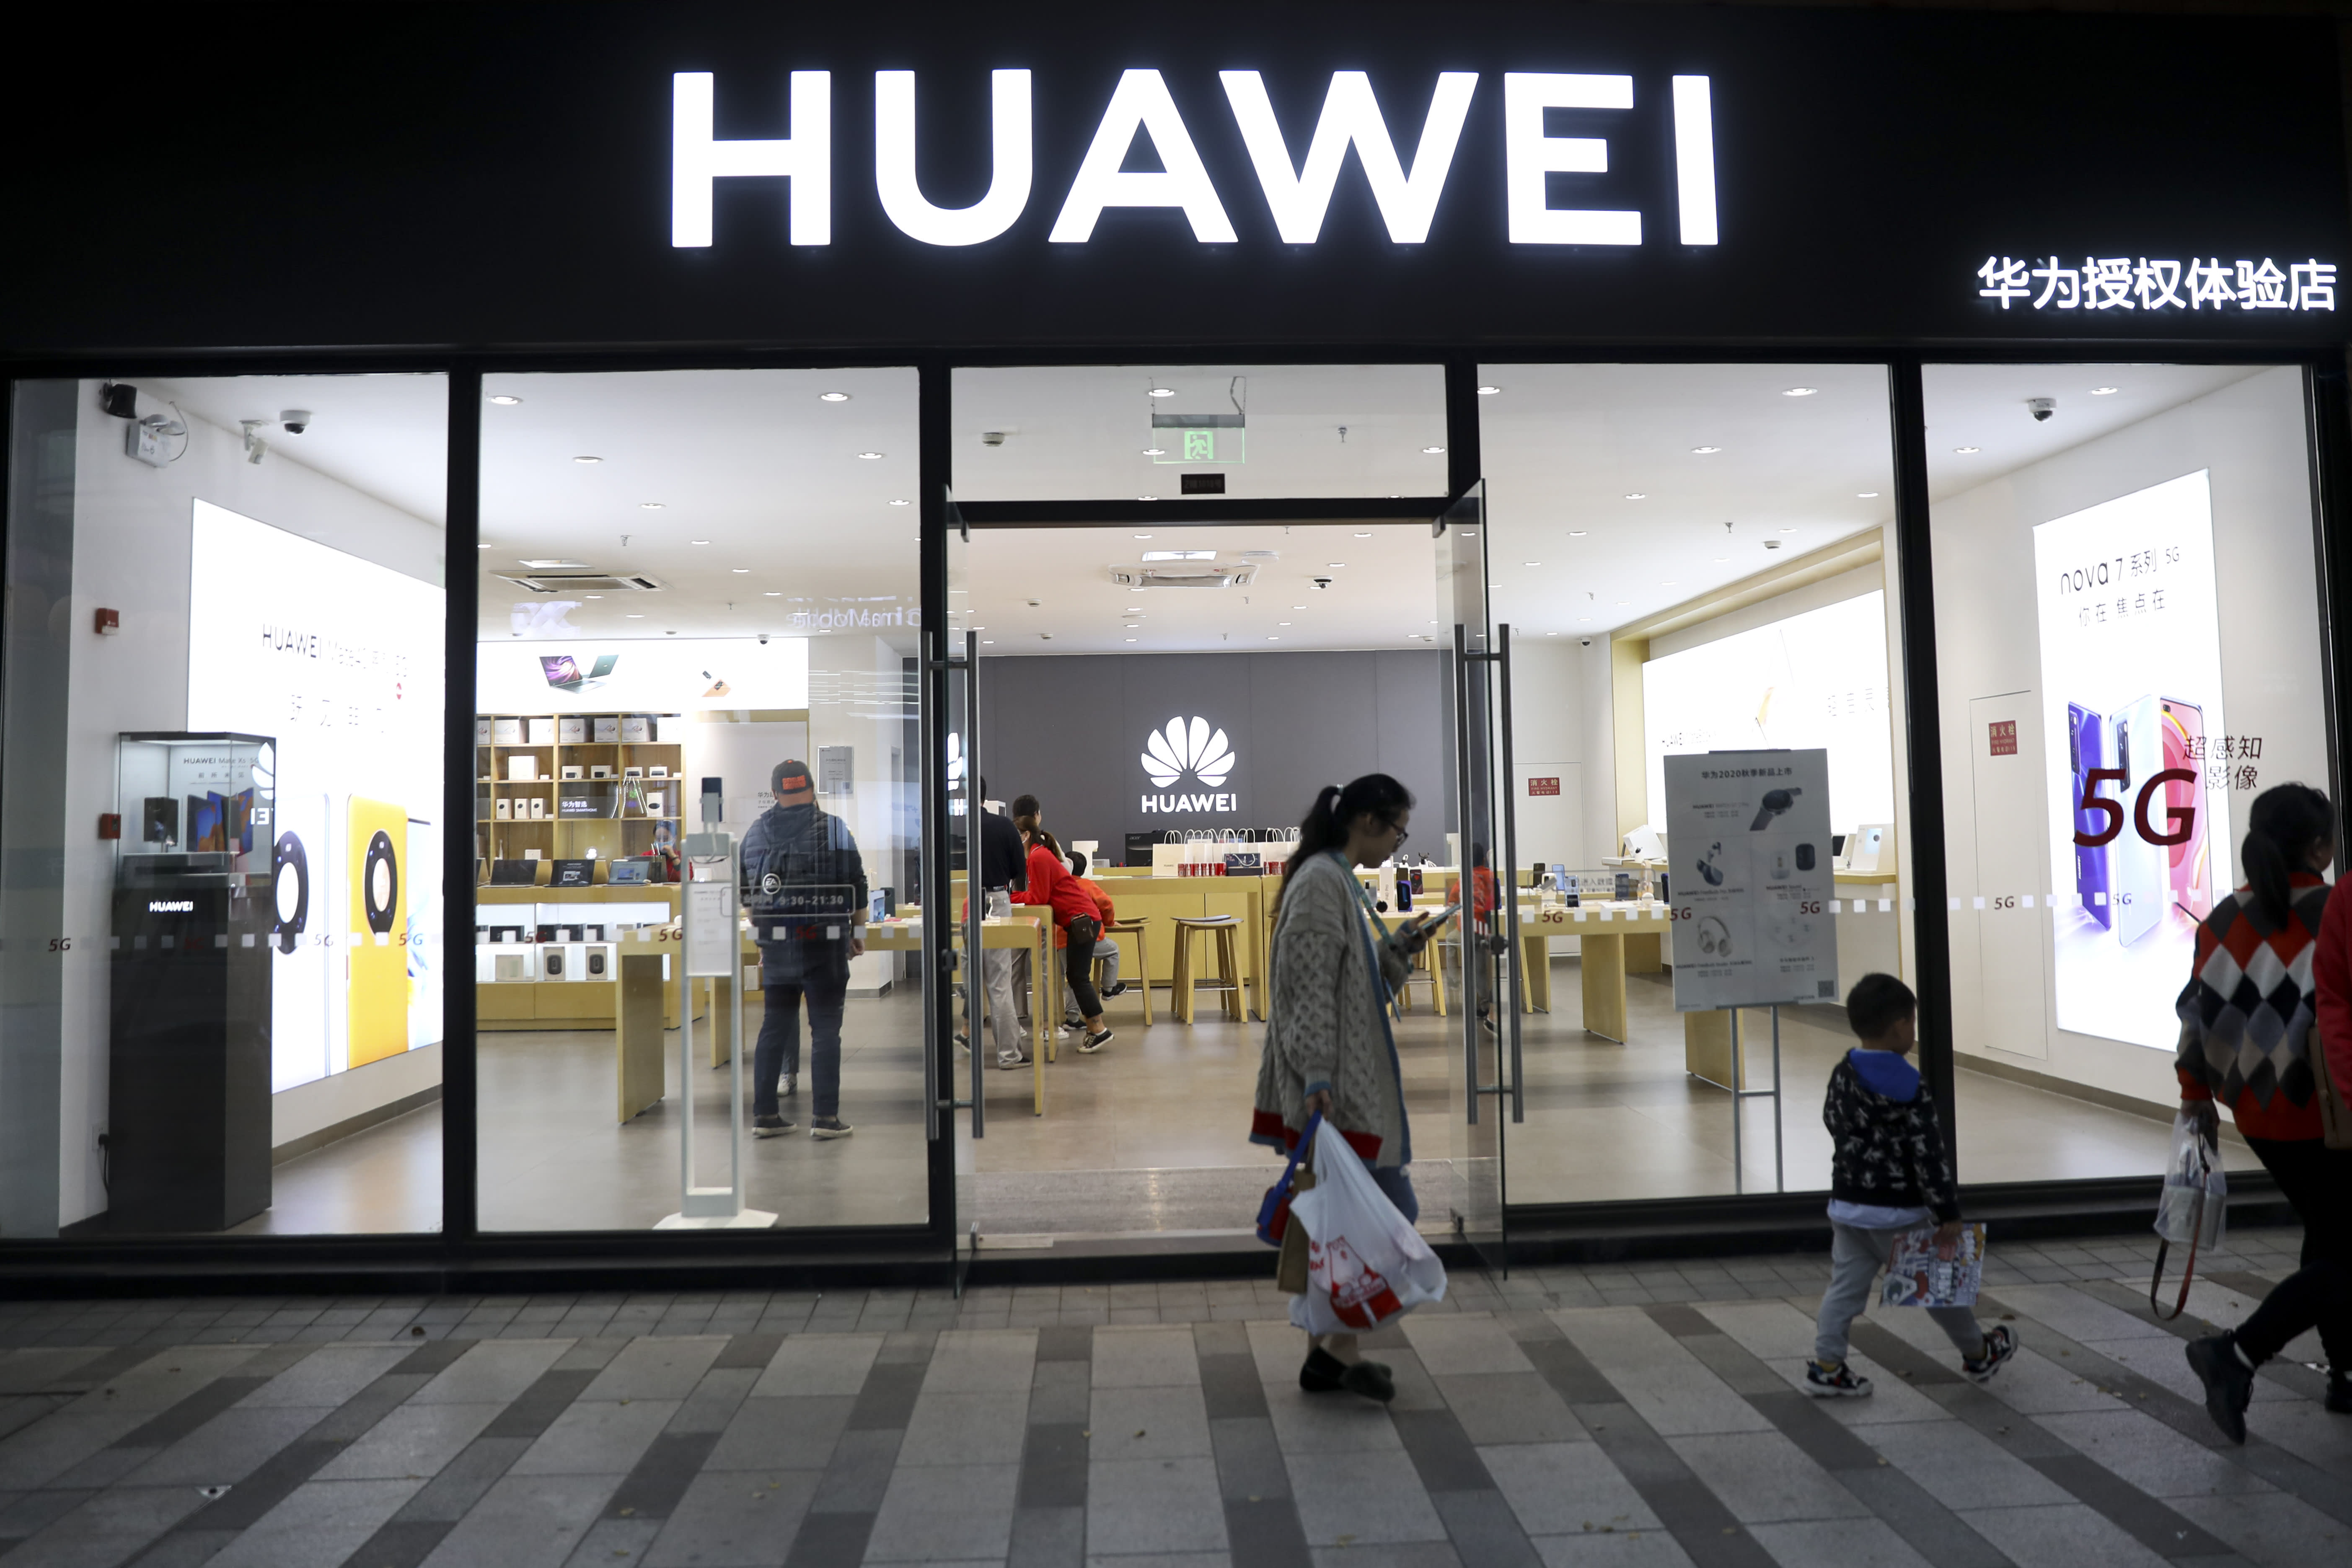 Huawei Q4 smartphone shipments drop 41% as US sanctions bite